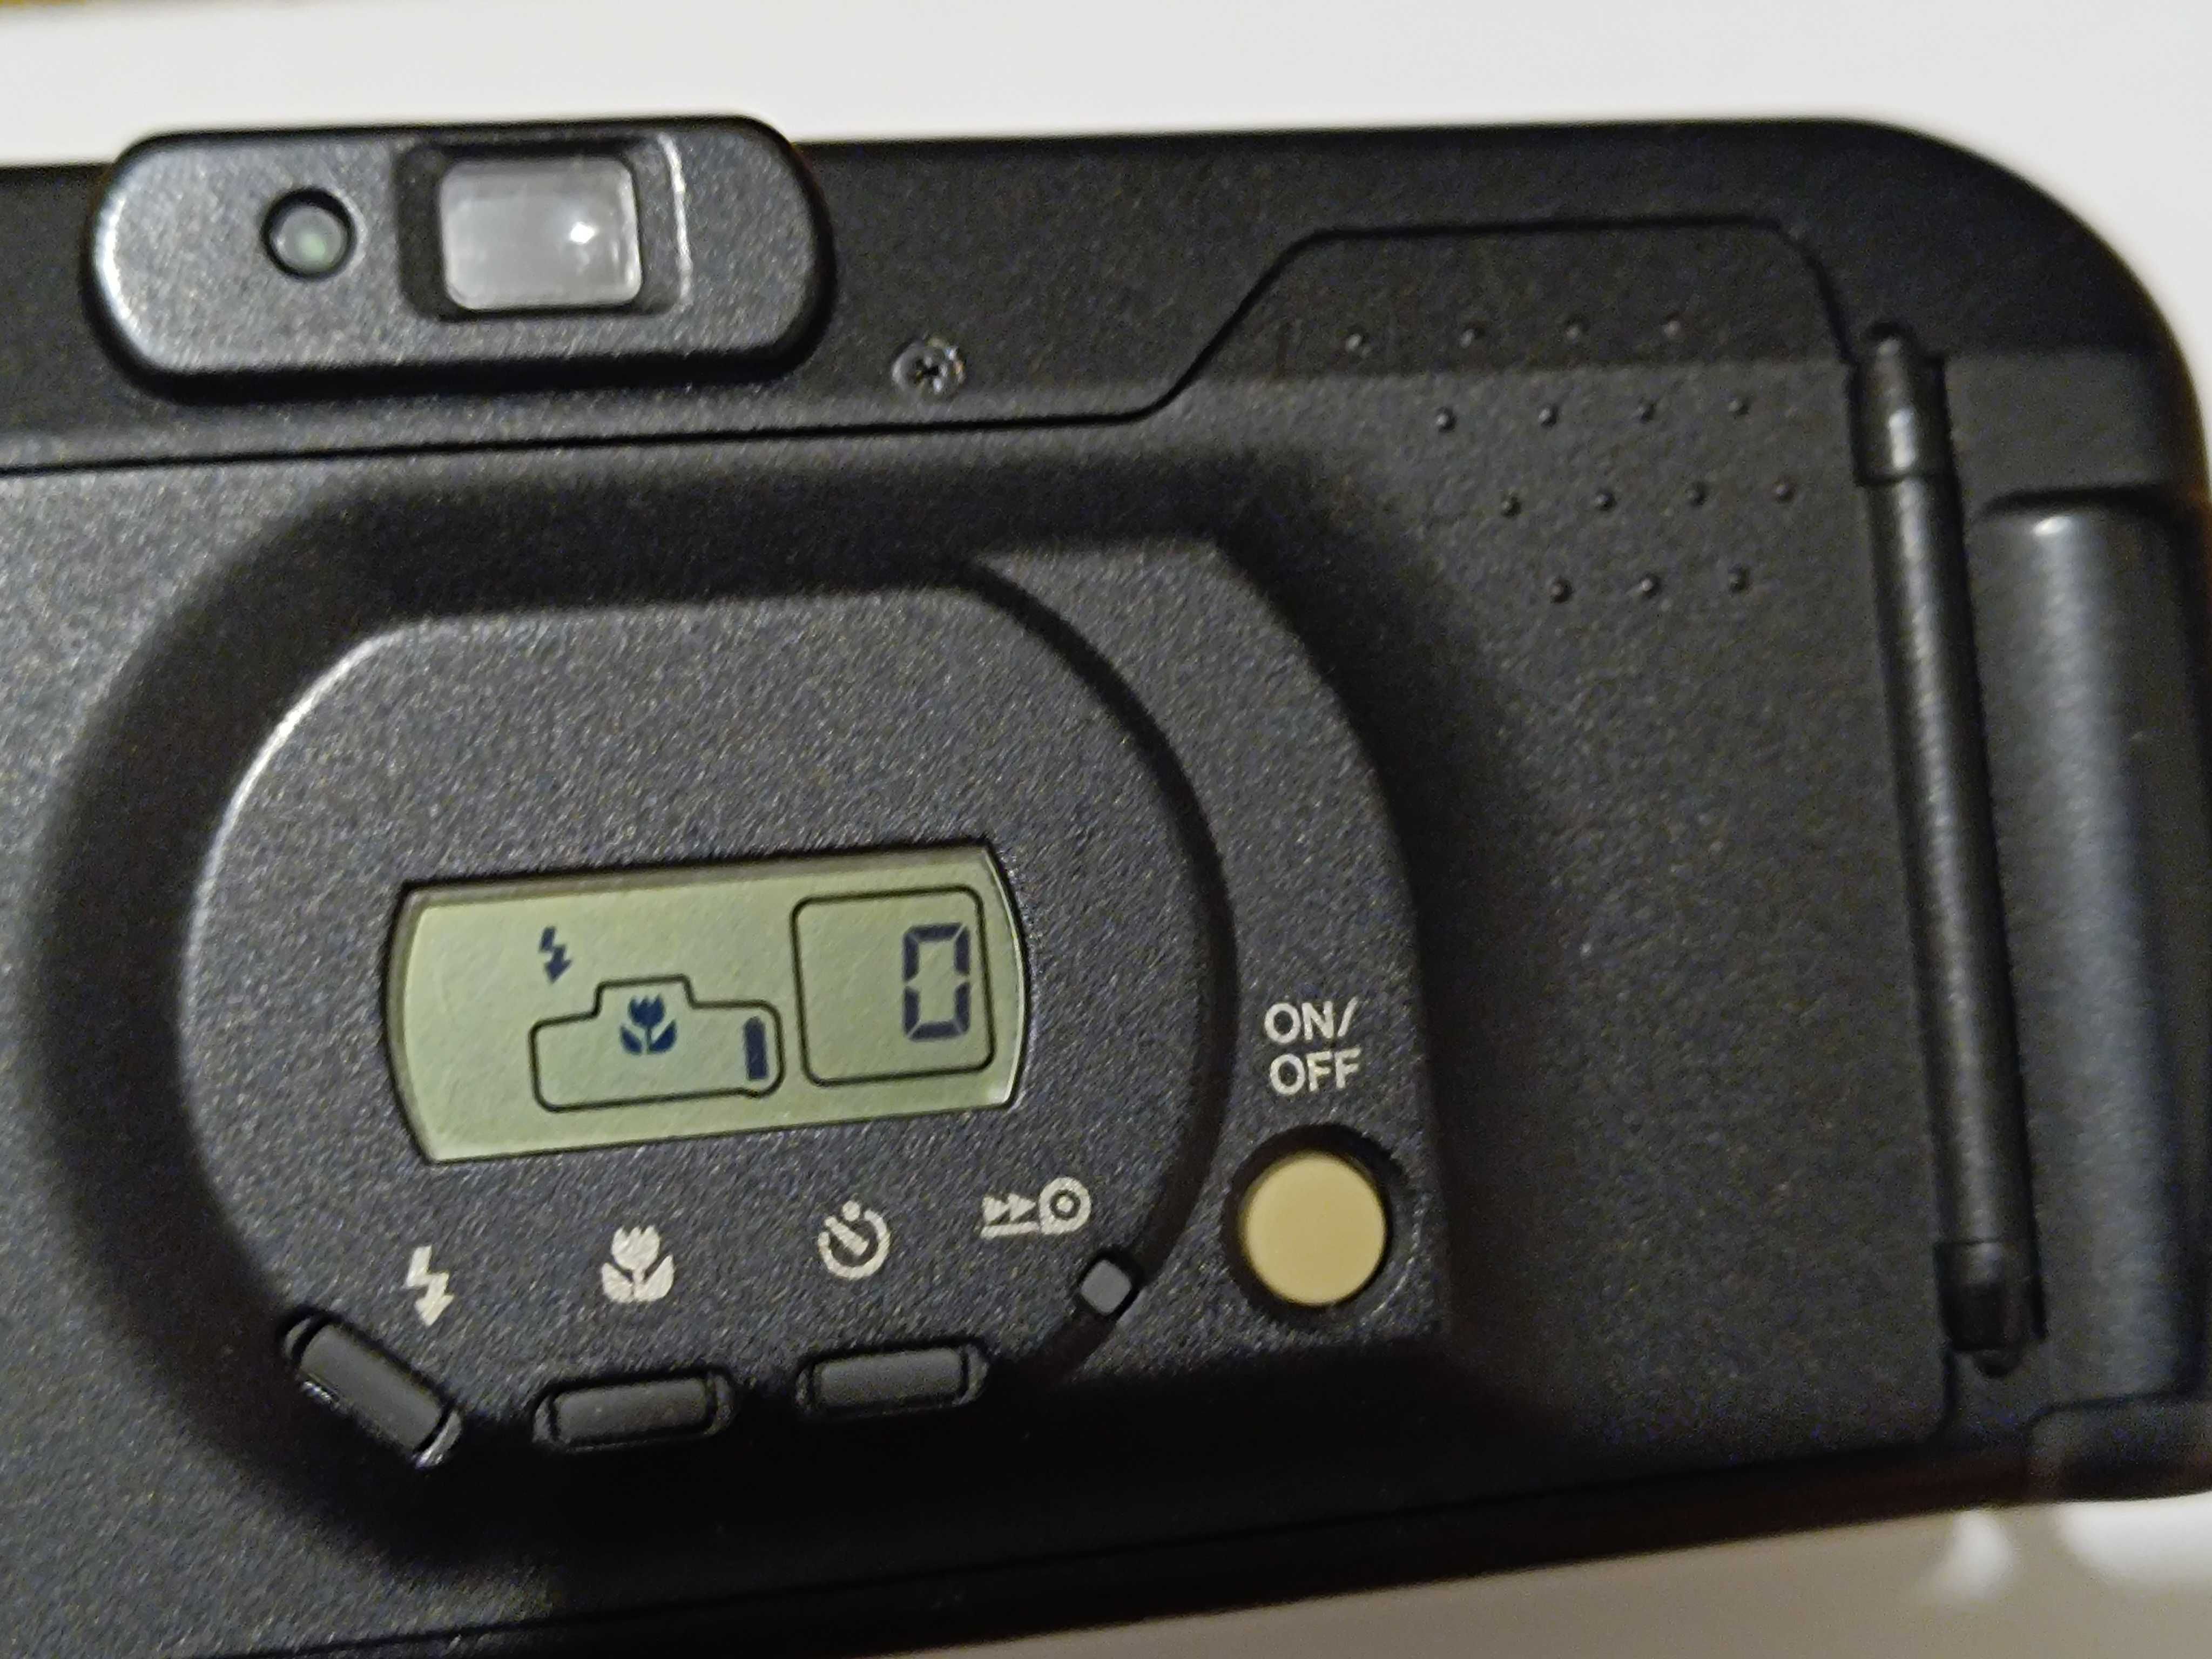 Пленочный фотоаппарат Canon Prima Zoom Mini